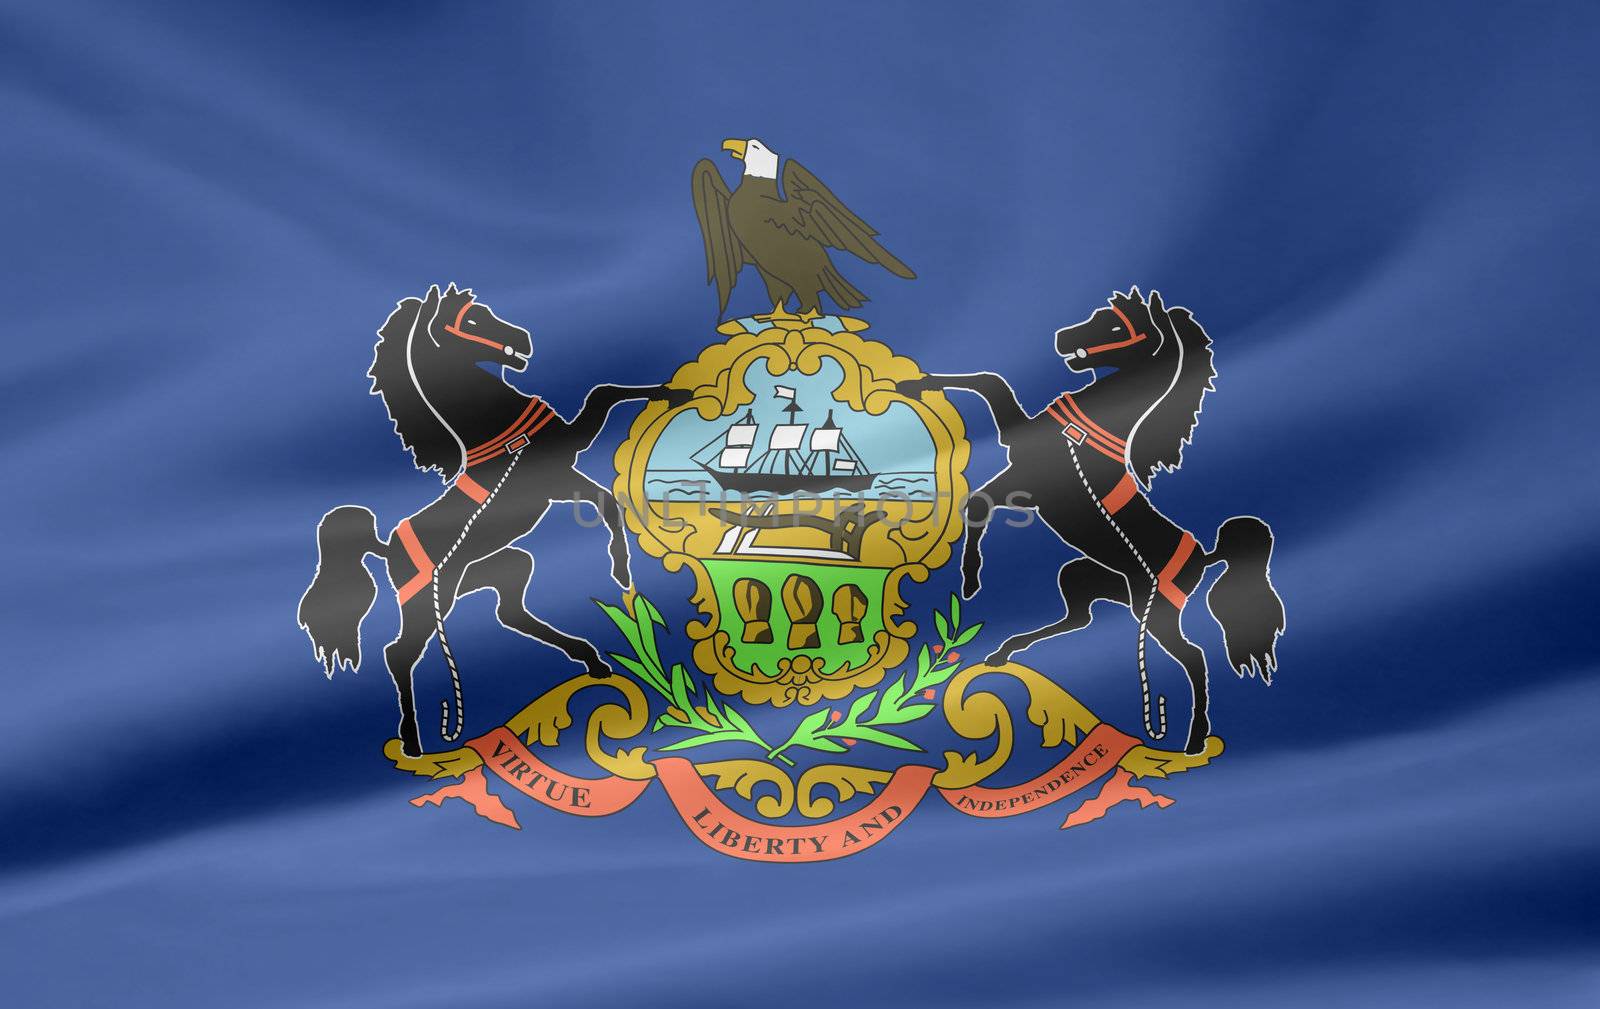 Flag of Pennsylvania